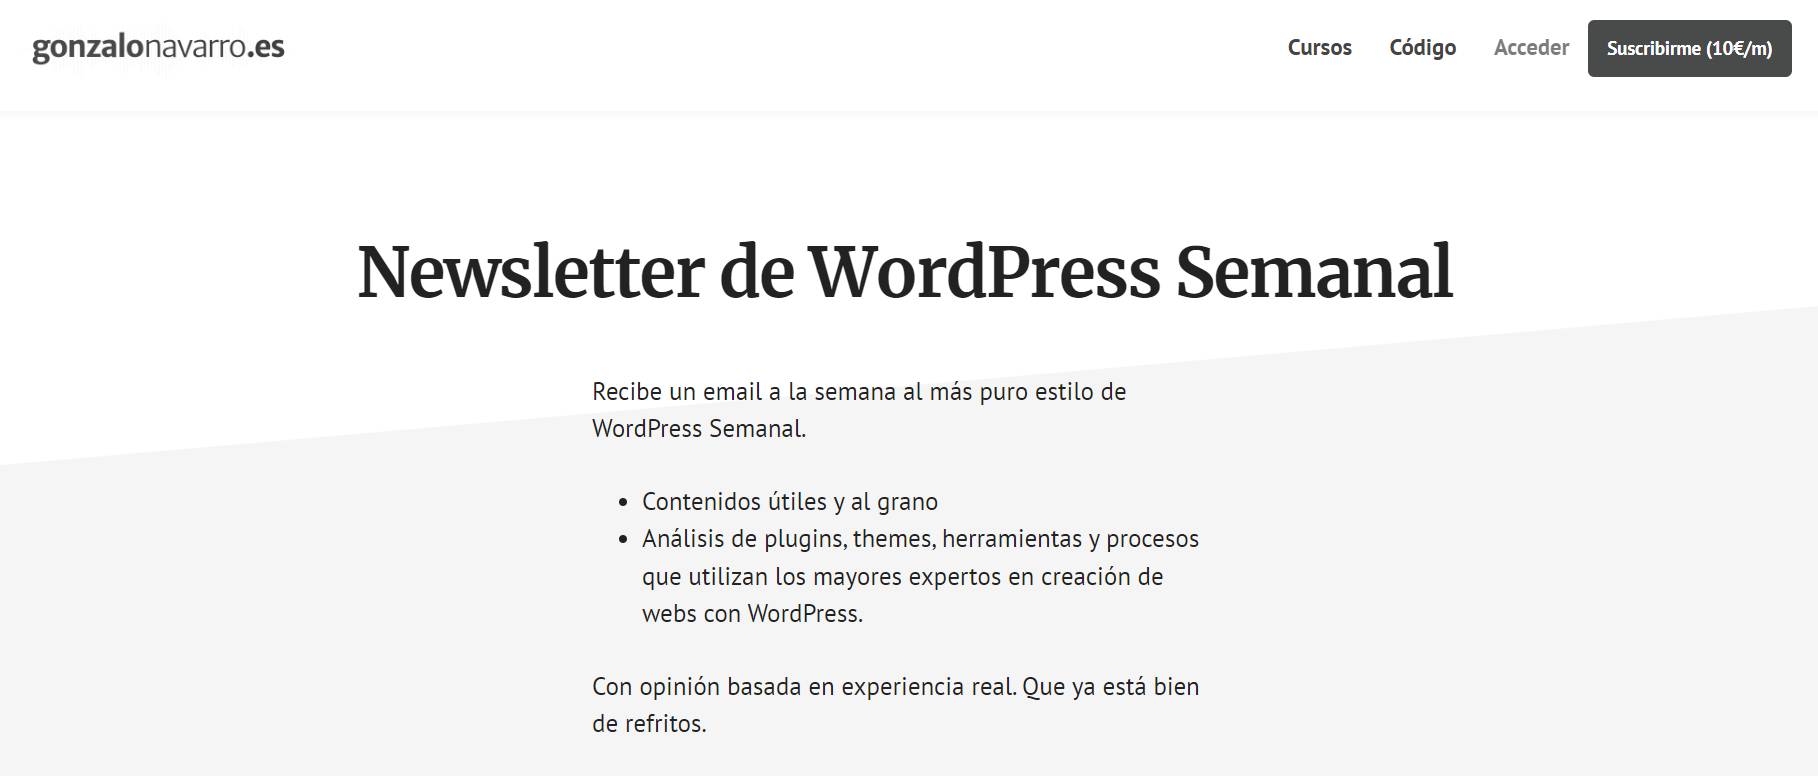 WordPress Semanal Newsletter Gonzalo Navarro Modular